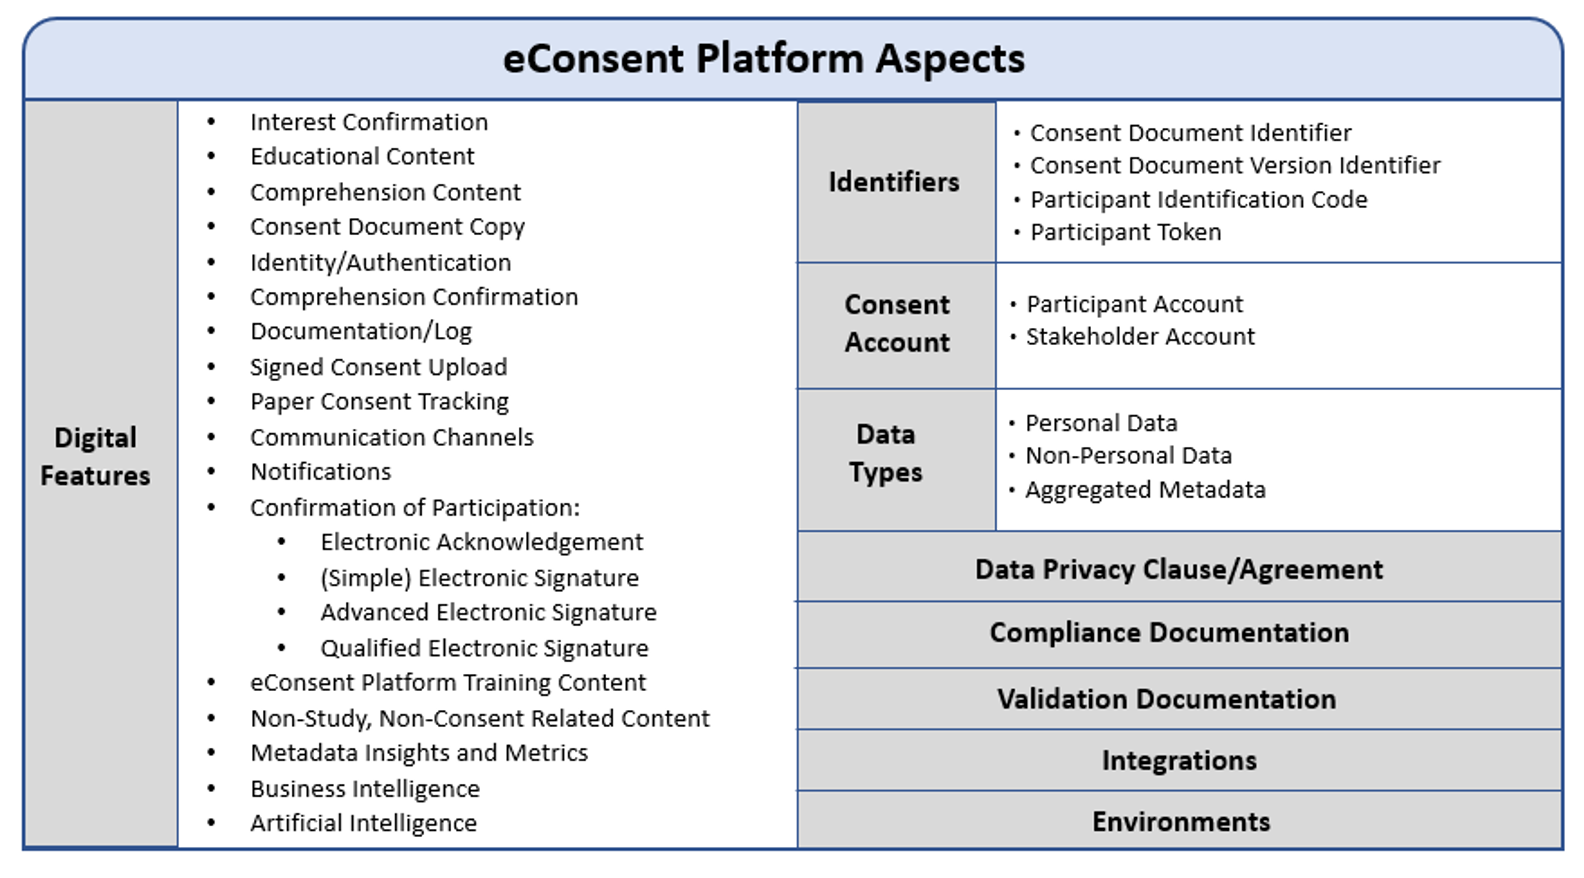 Figure 3. Overview of Key eConsent Platform Aspects.